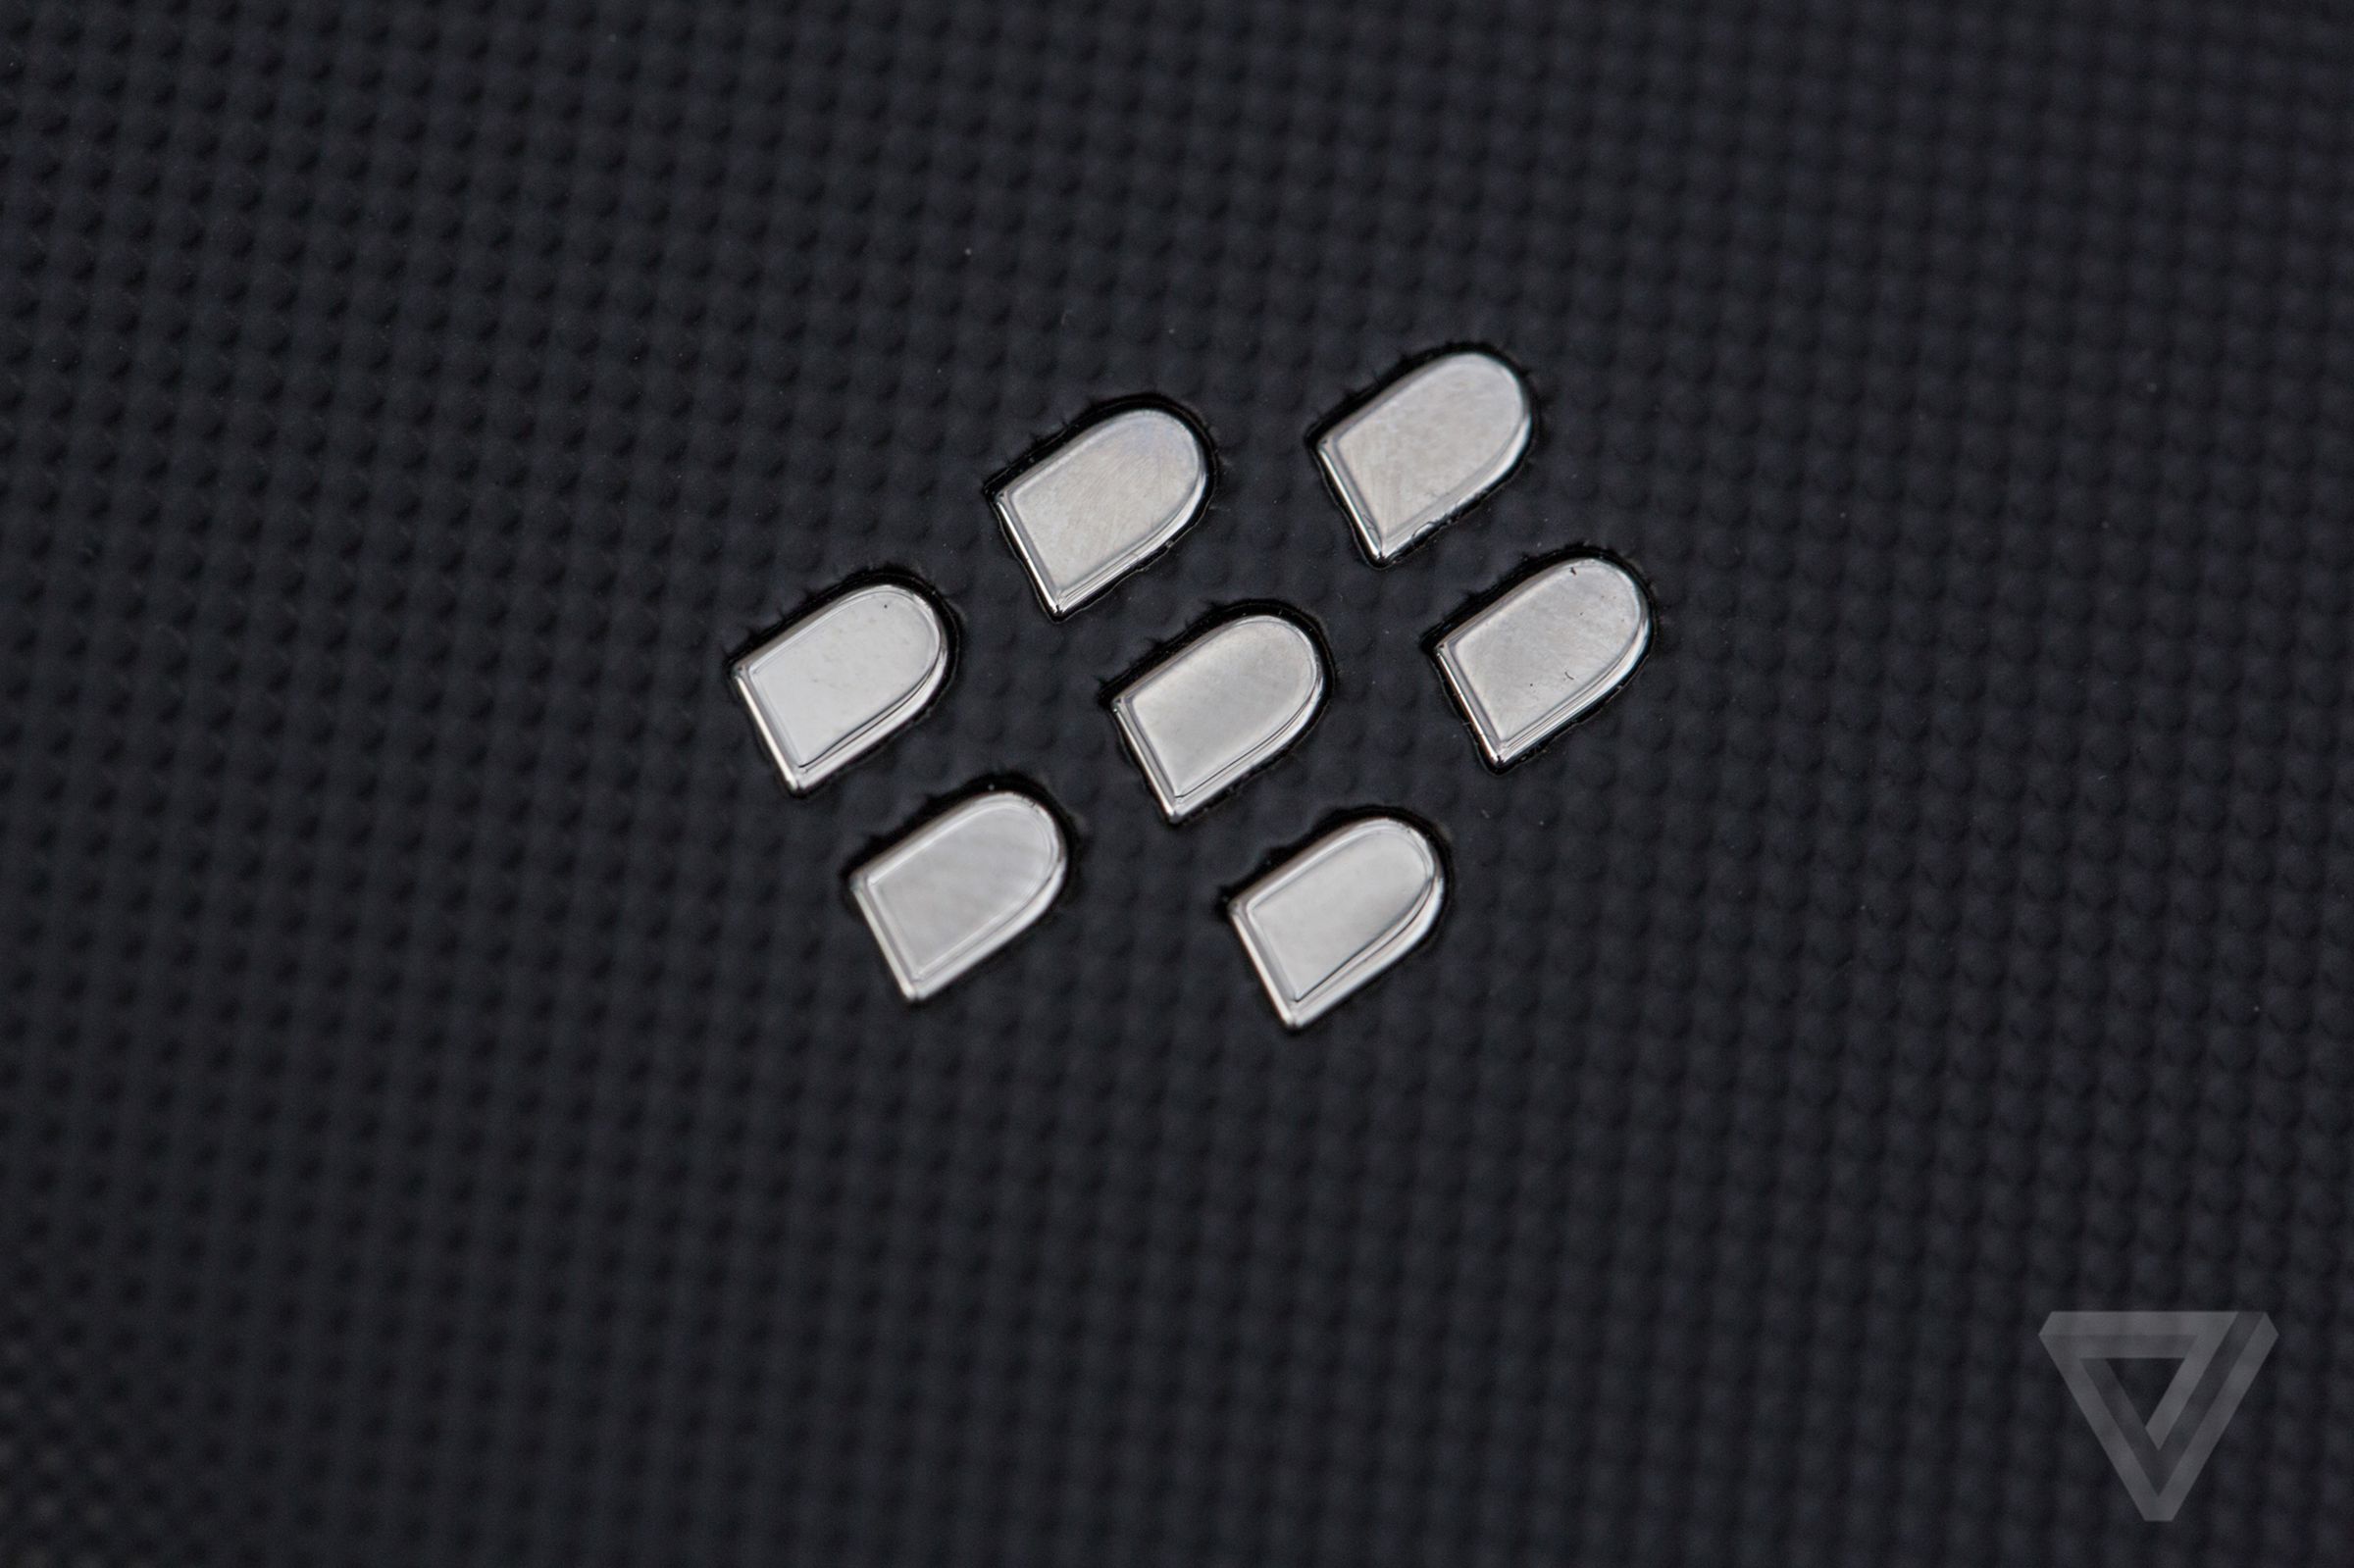 BlackBerry Classic in Photos